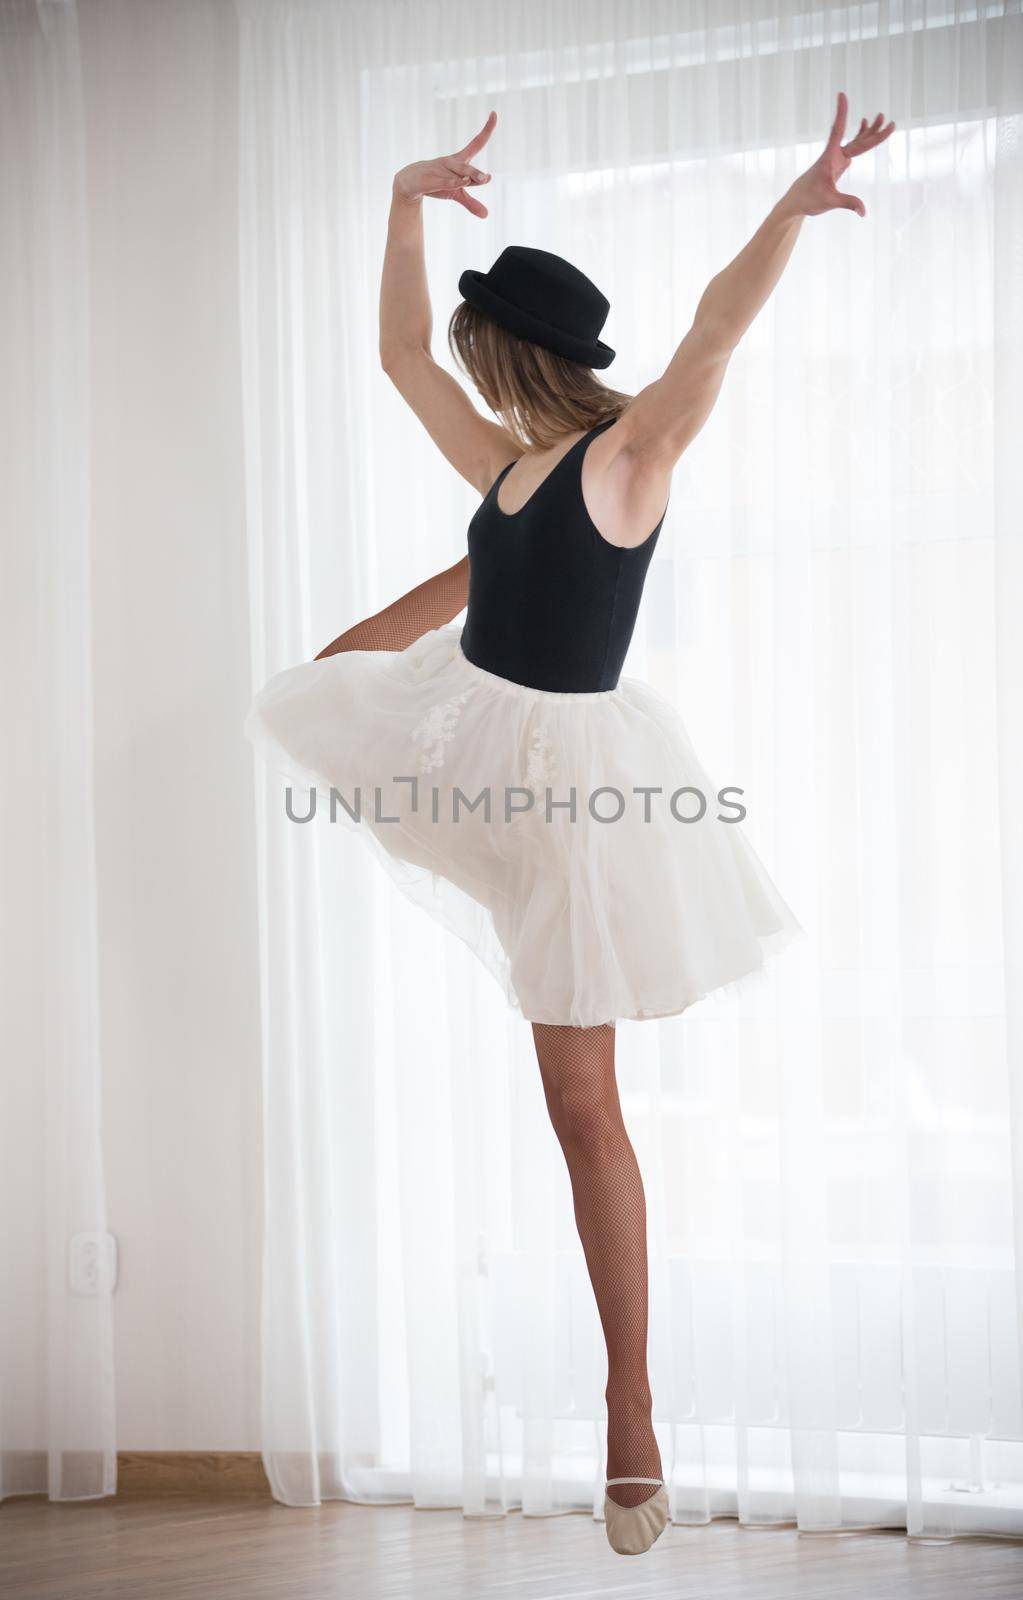 Ballerina in hat stands near the window, raises her leg, in a bright studio, telephoto shot